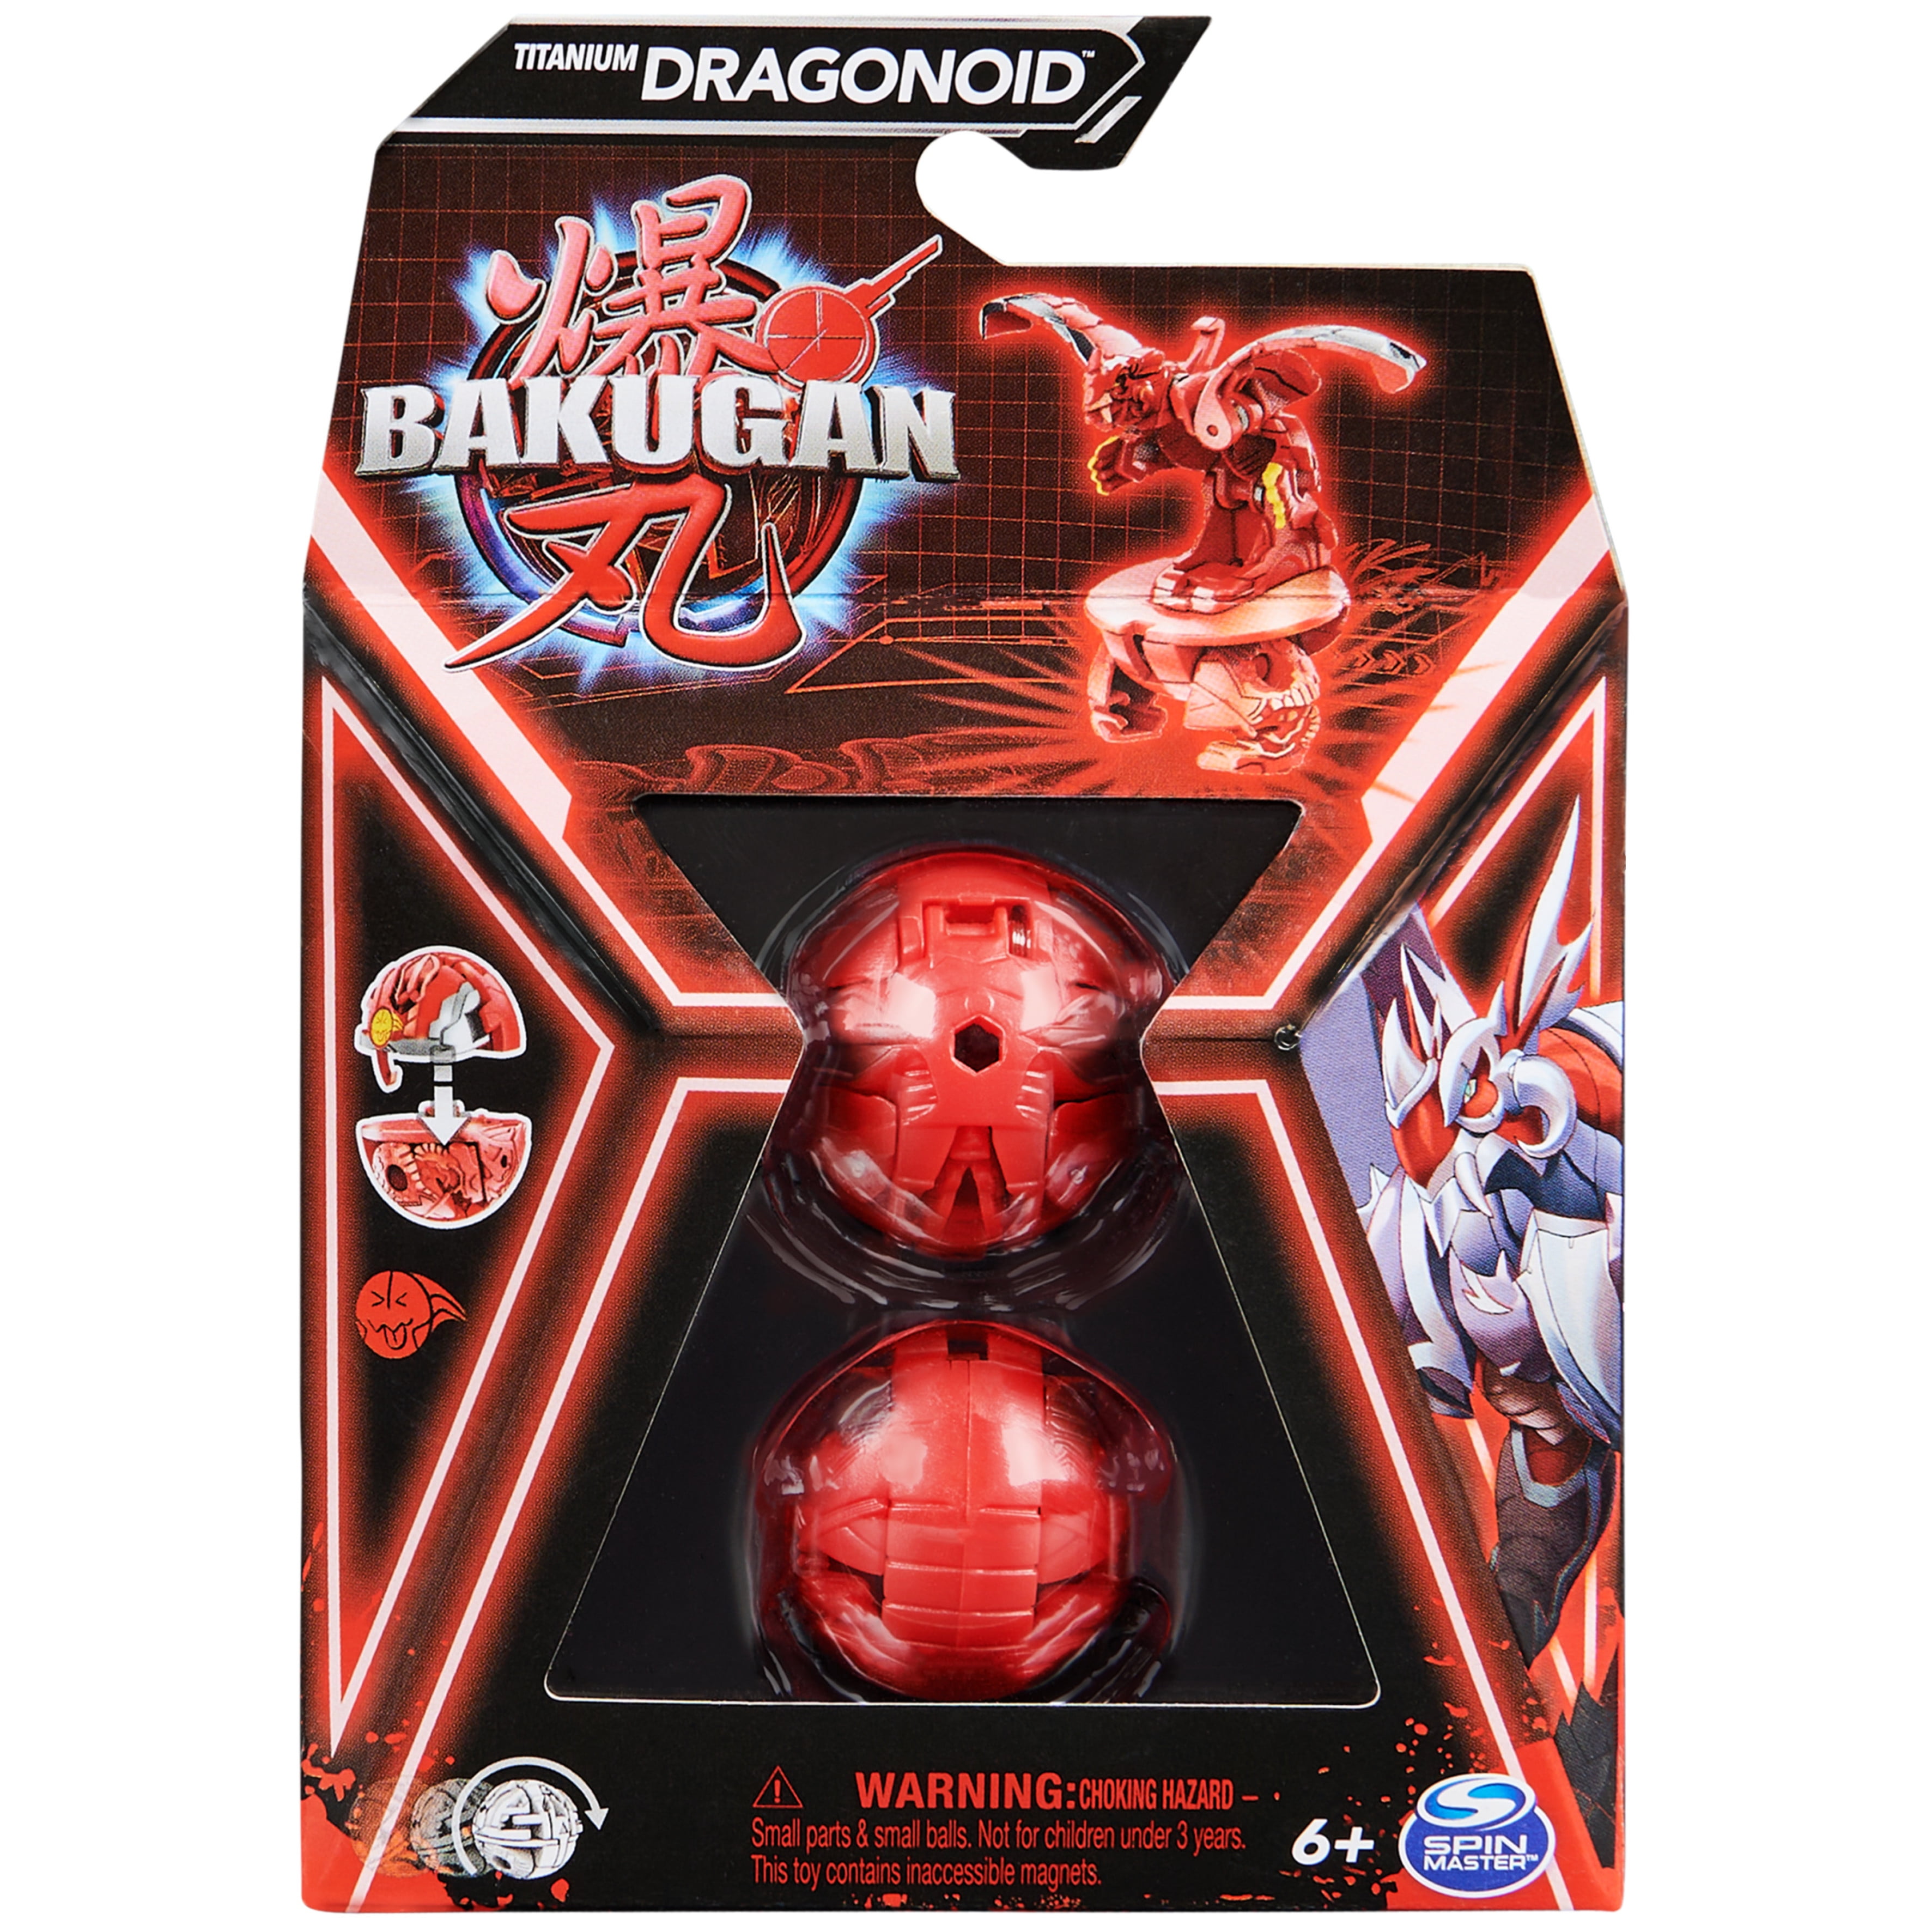 Bakugan - coffret de 2 bakugan mystere baku-tin saison 3 - 6060138 -  figurines a collectionner - jeu de récré BAKUGAN Pas Cher 